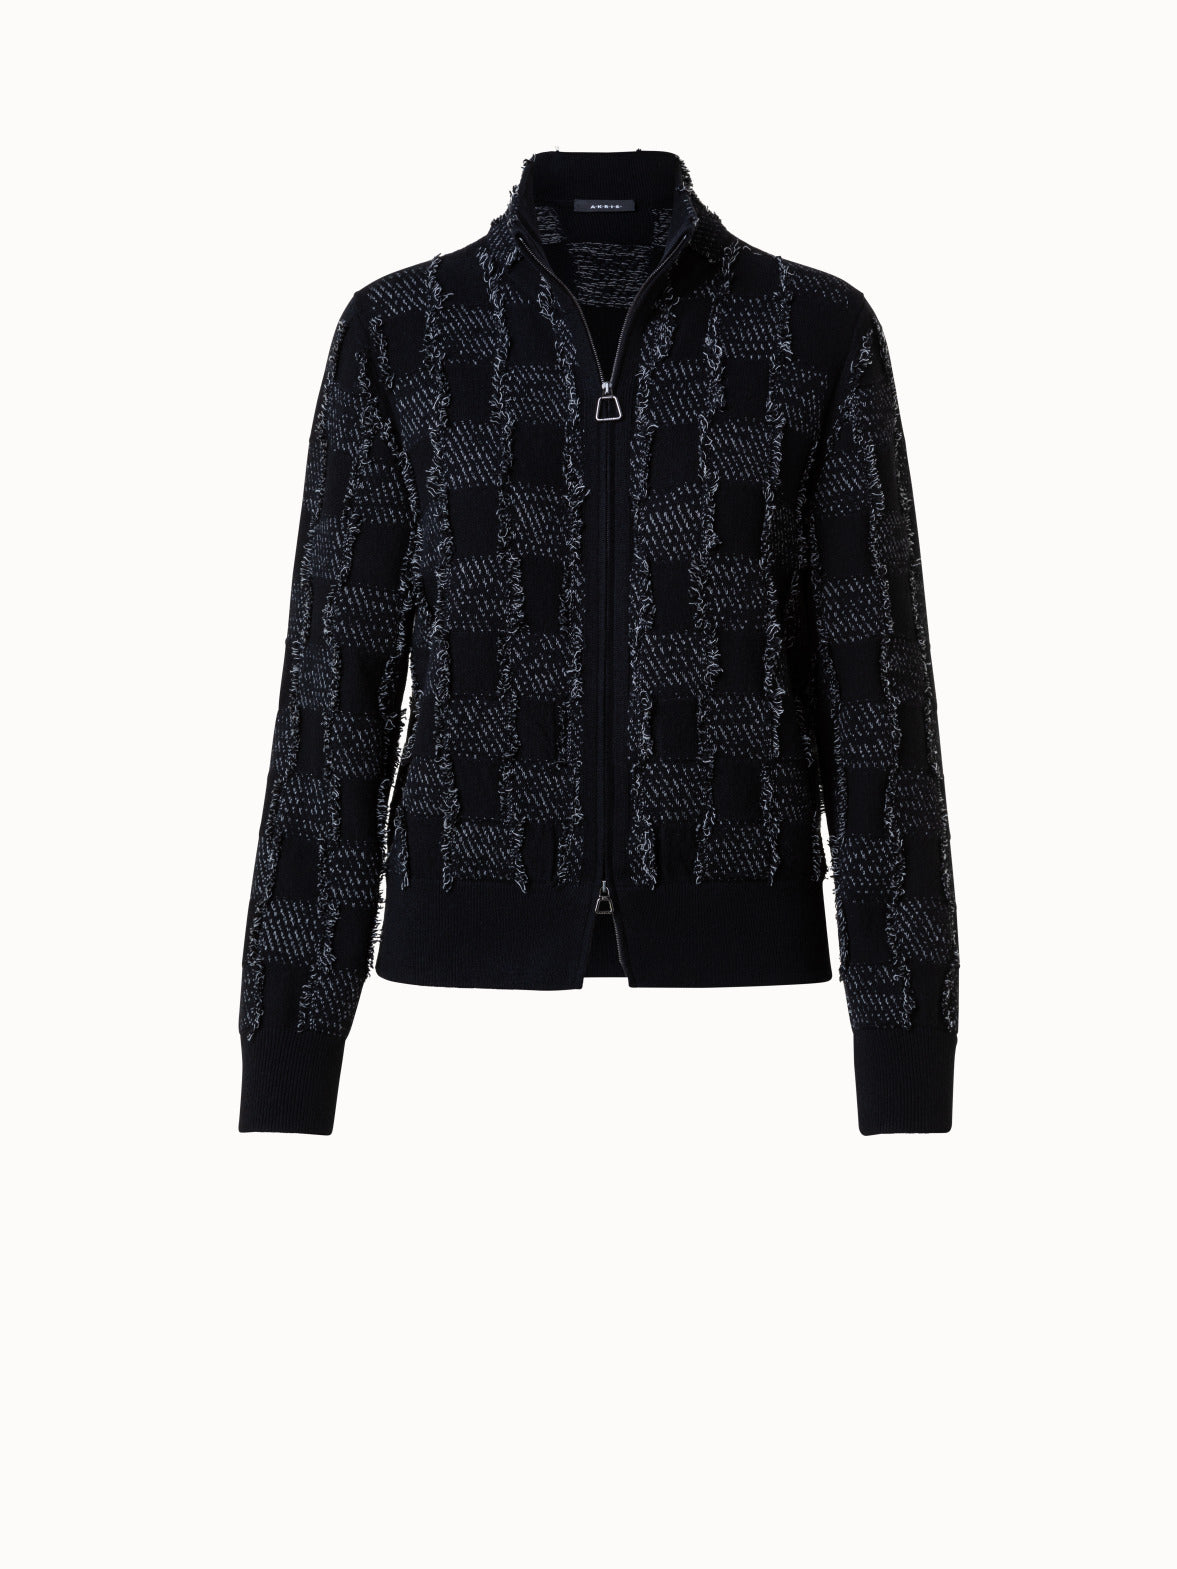 Louis Vuitton Knit Bomber Jacket